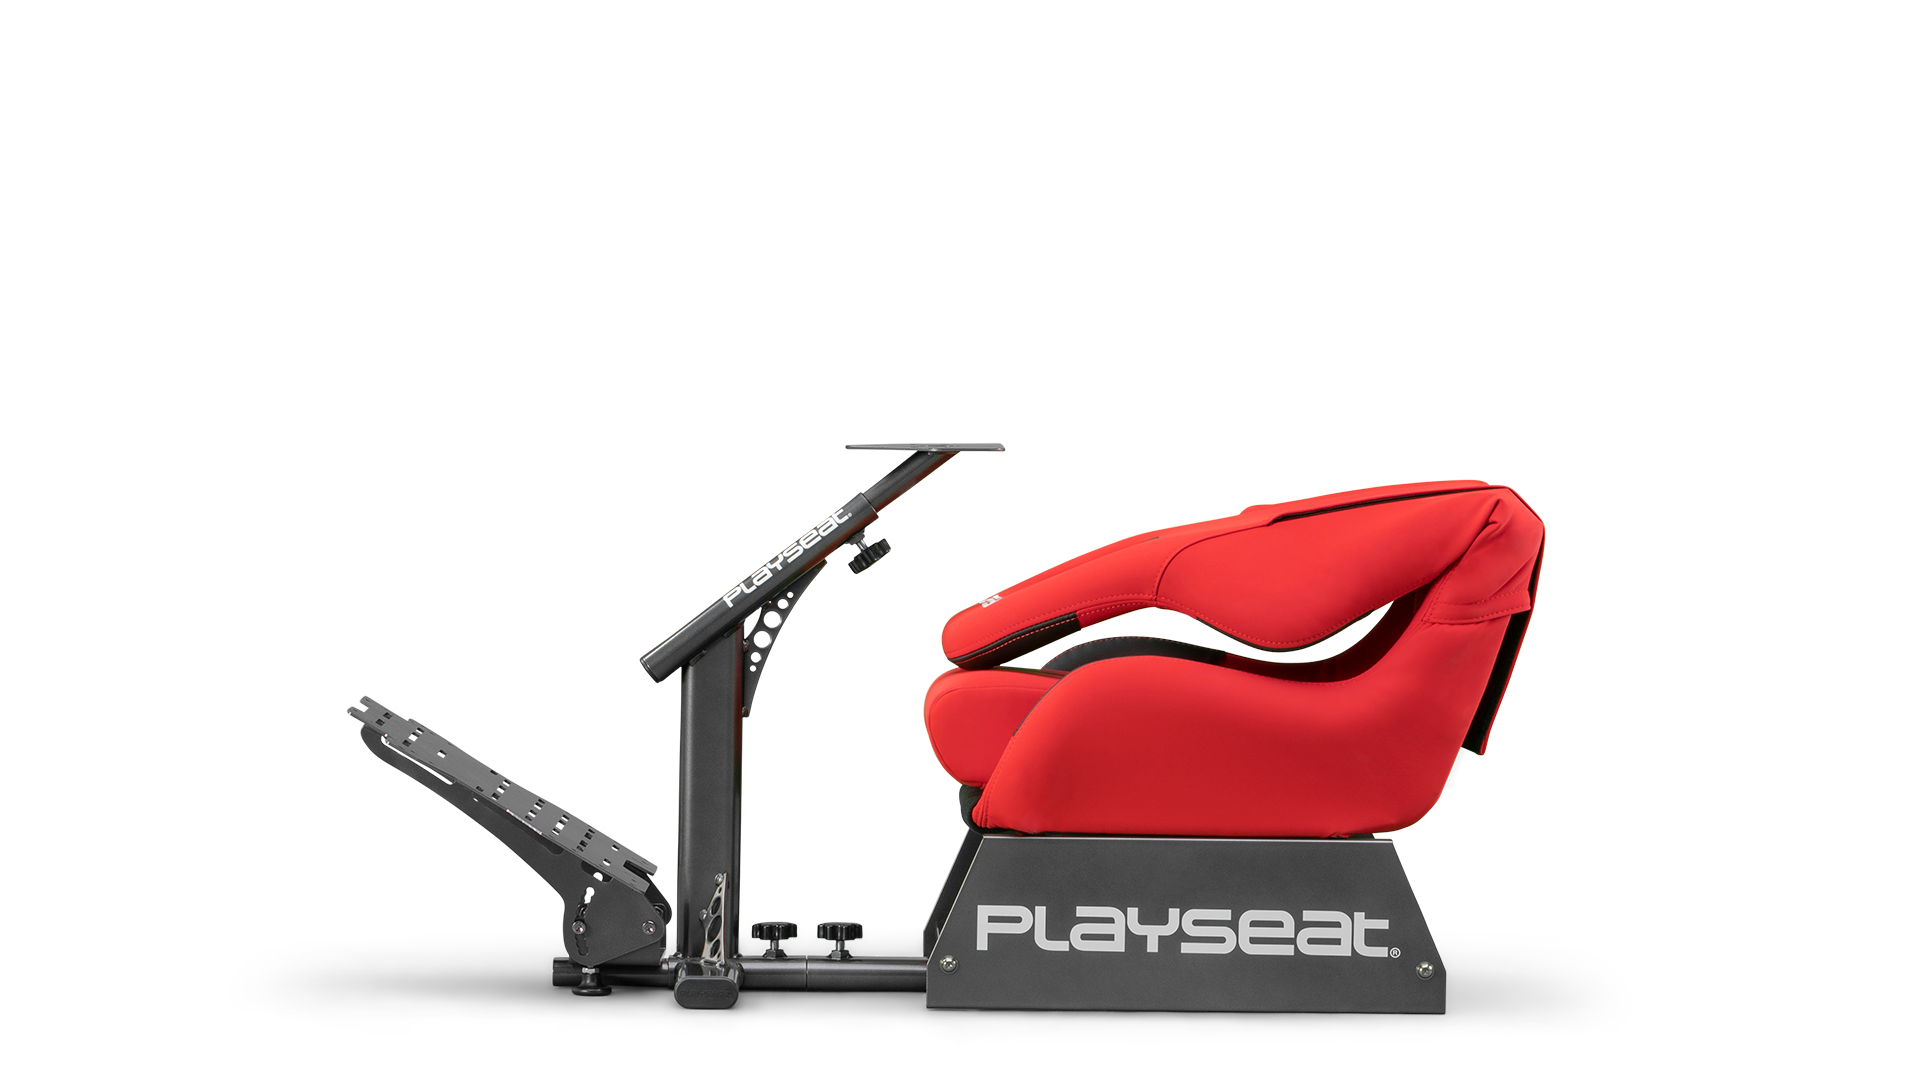 playseat-evolution-red-racing-simulator-foldable-1920x1080-1.png